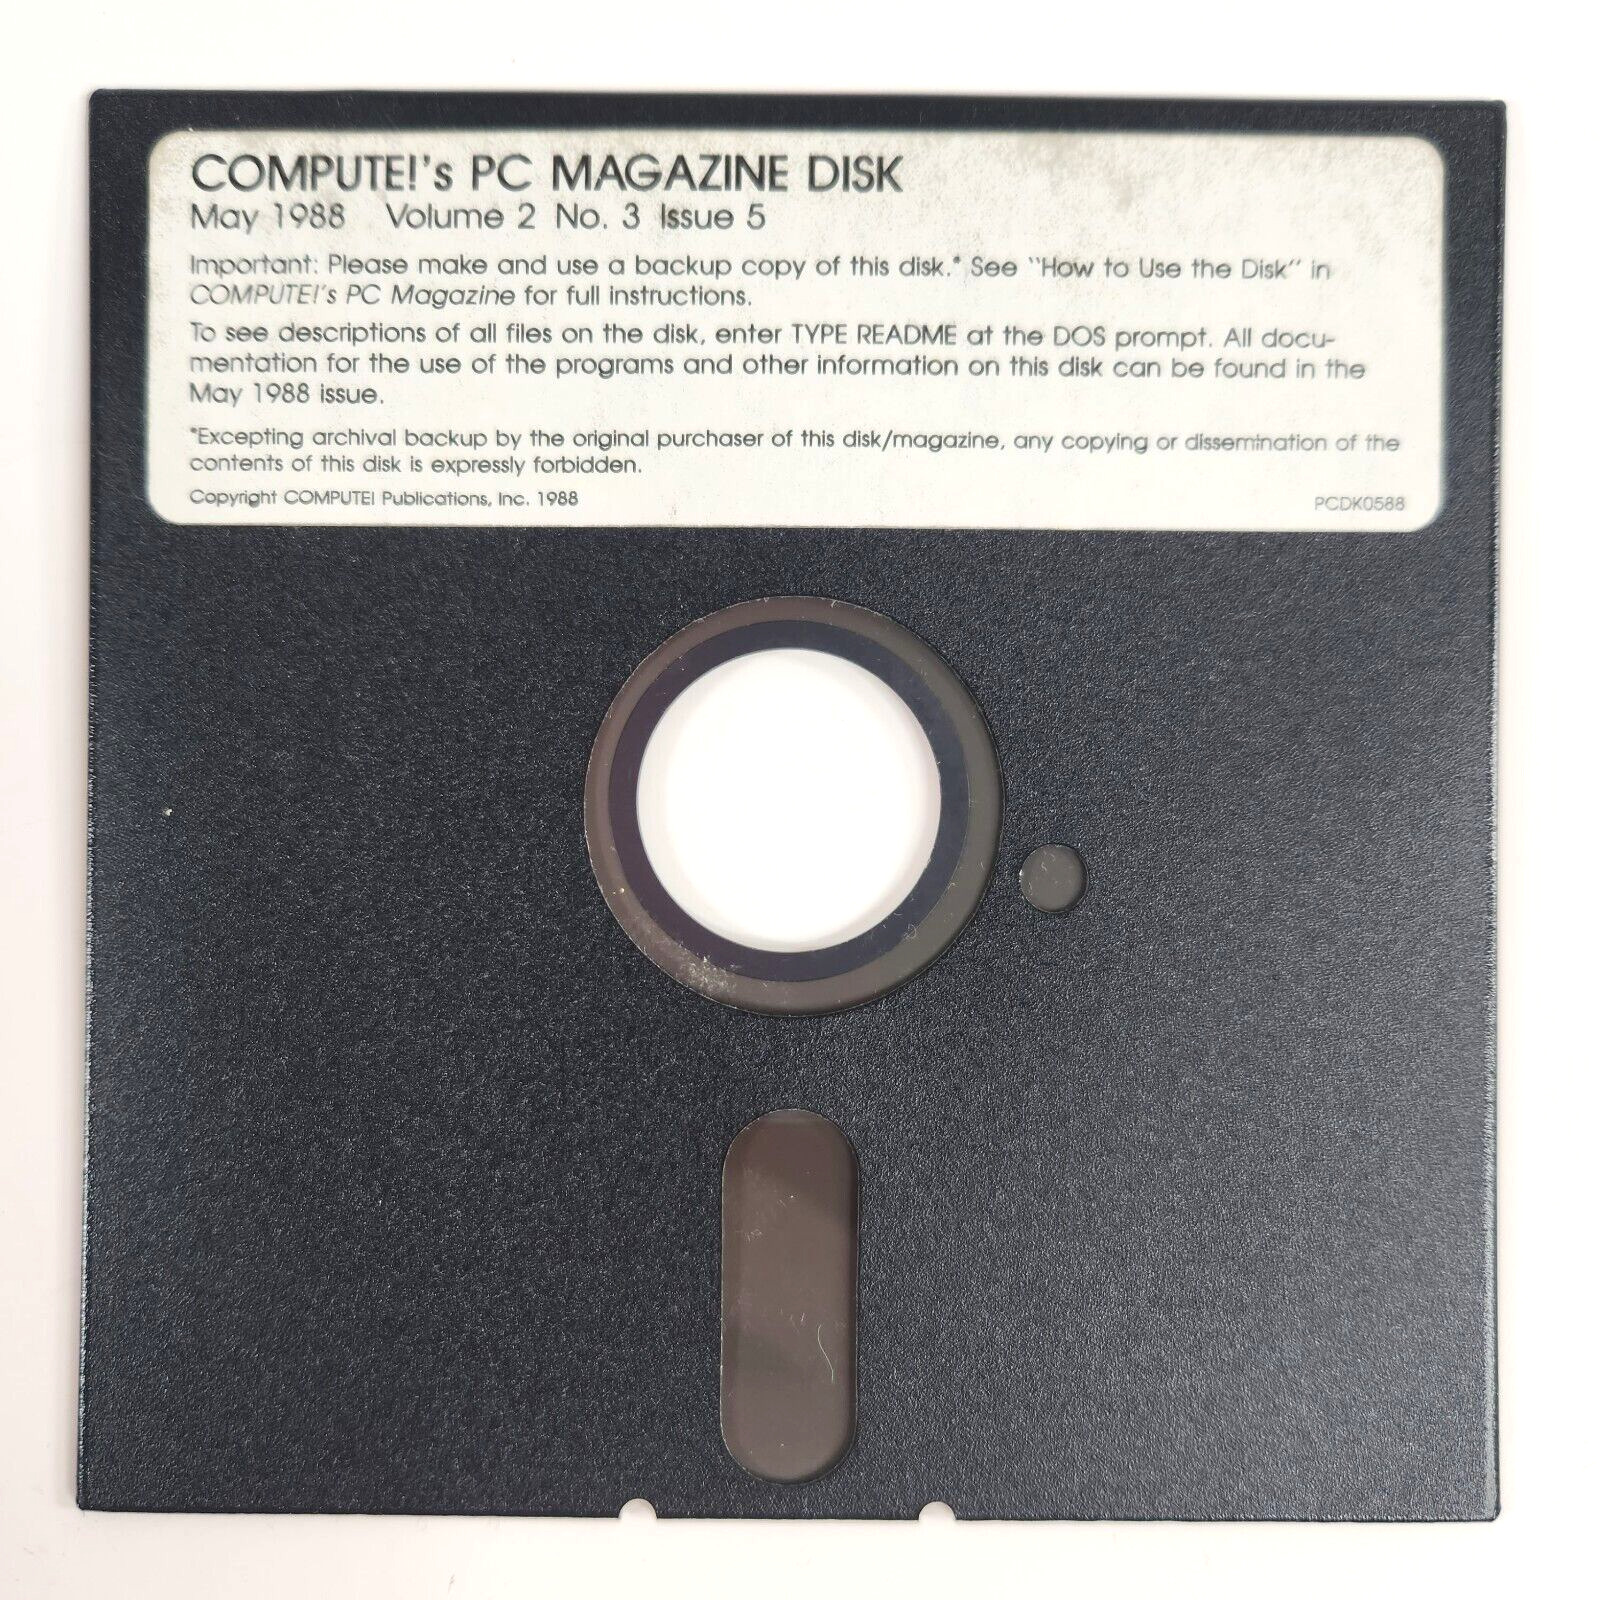 COMPUTE'S PC Magazine Disk Vol 2 No 3 Issue 5 Vintage Software 5.25 Floppy Disk